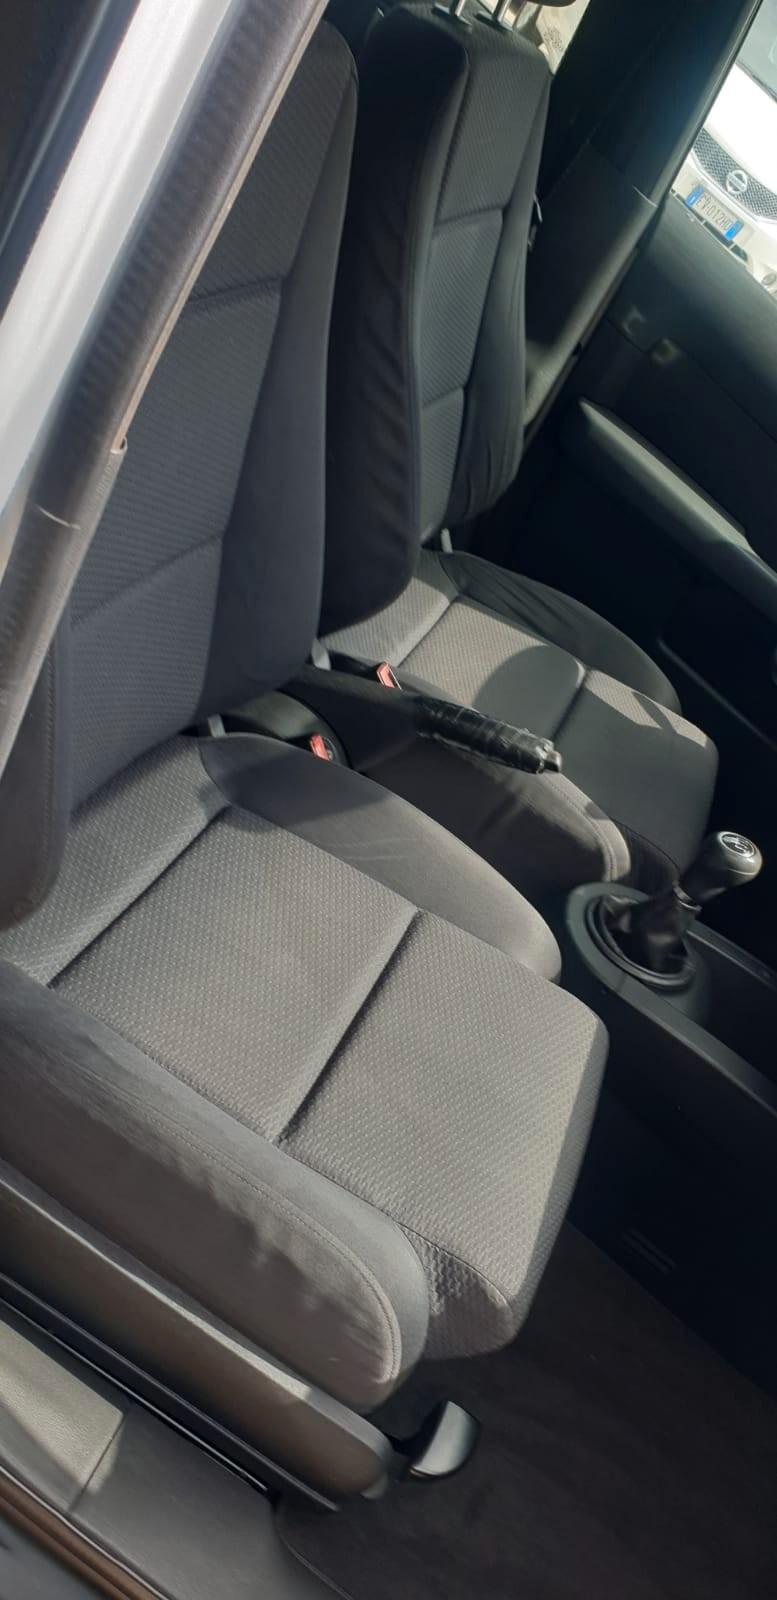 Audi A2 1.4 16V Comfort